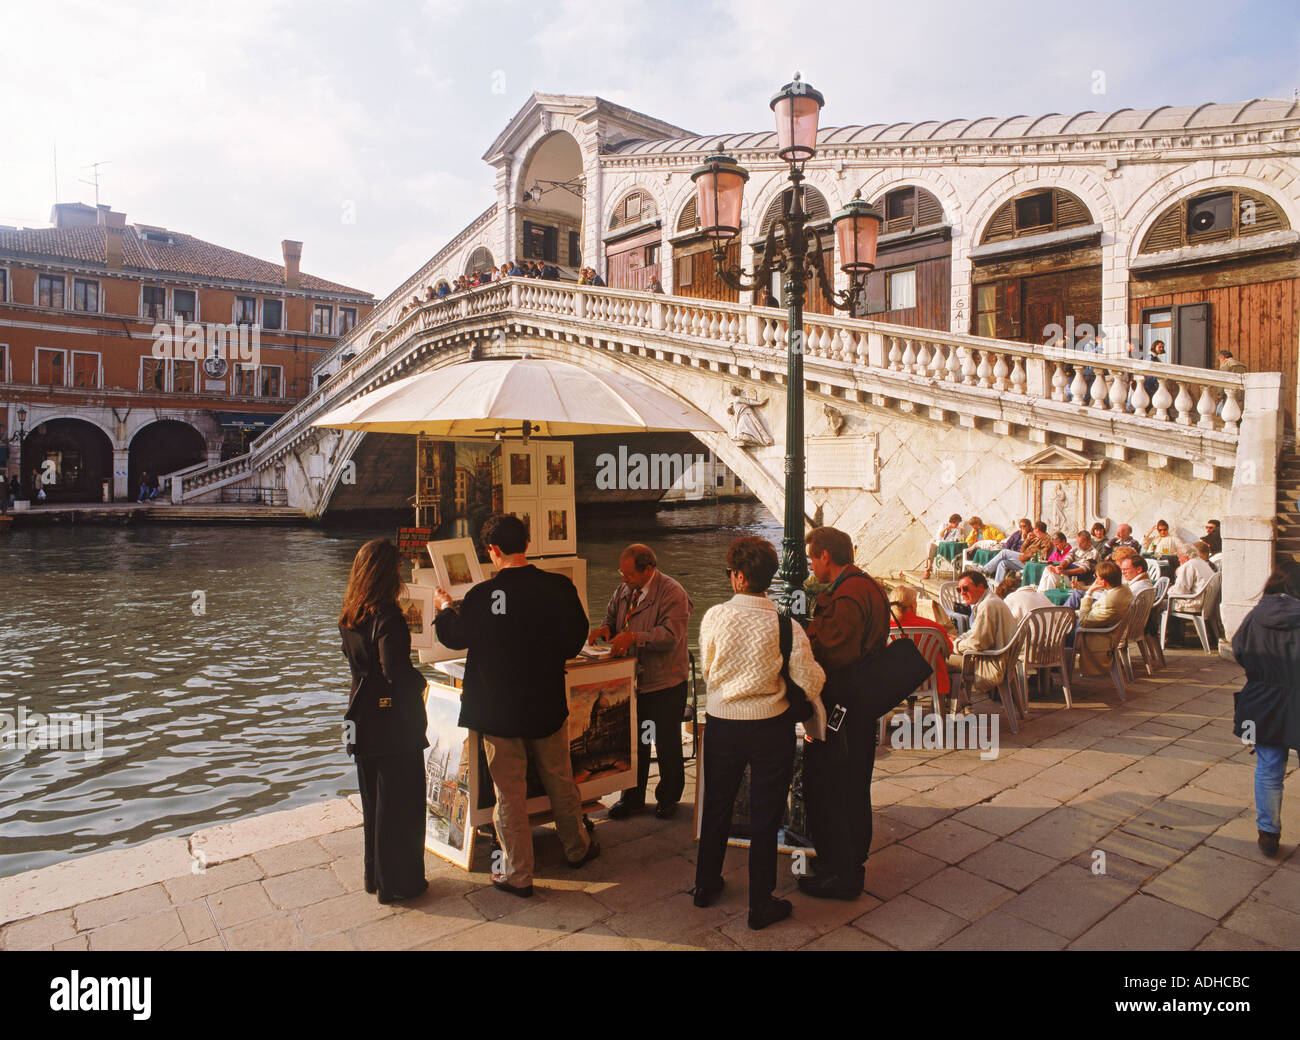 Cafe und Touristen am Canal Grande Rialto Brücke in Venedig Stockfoto